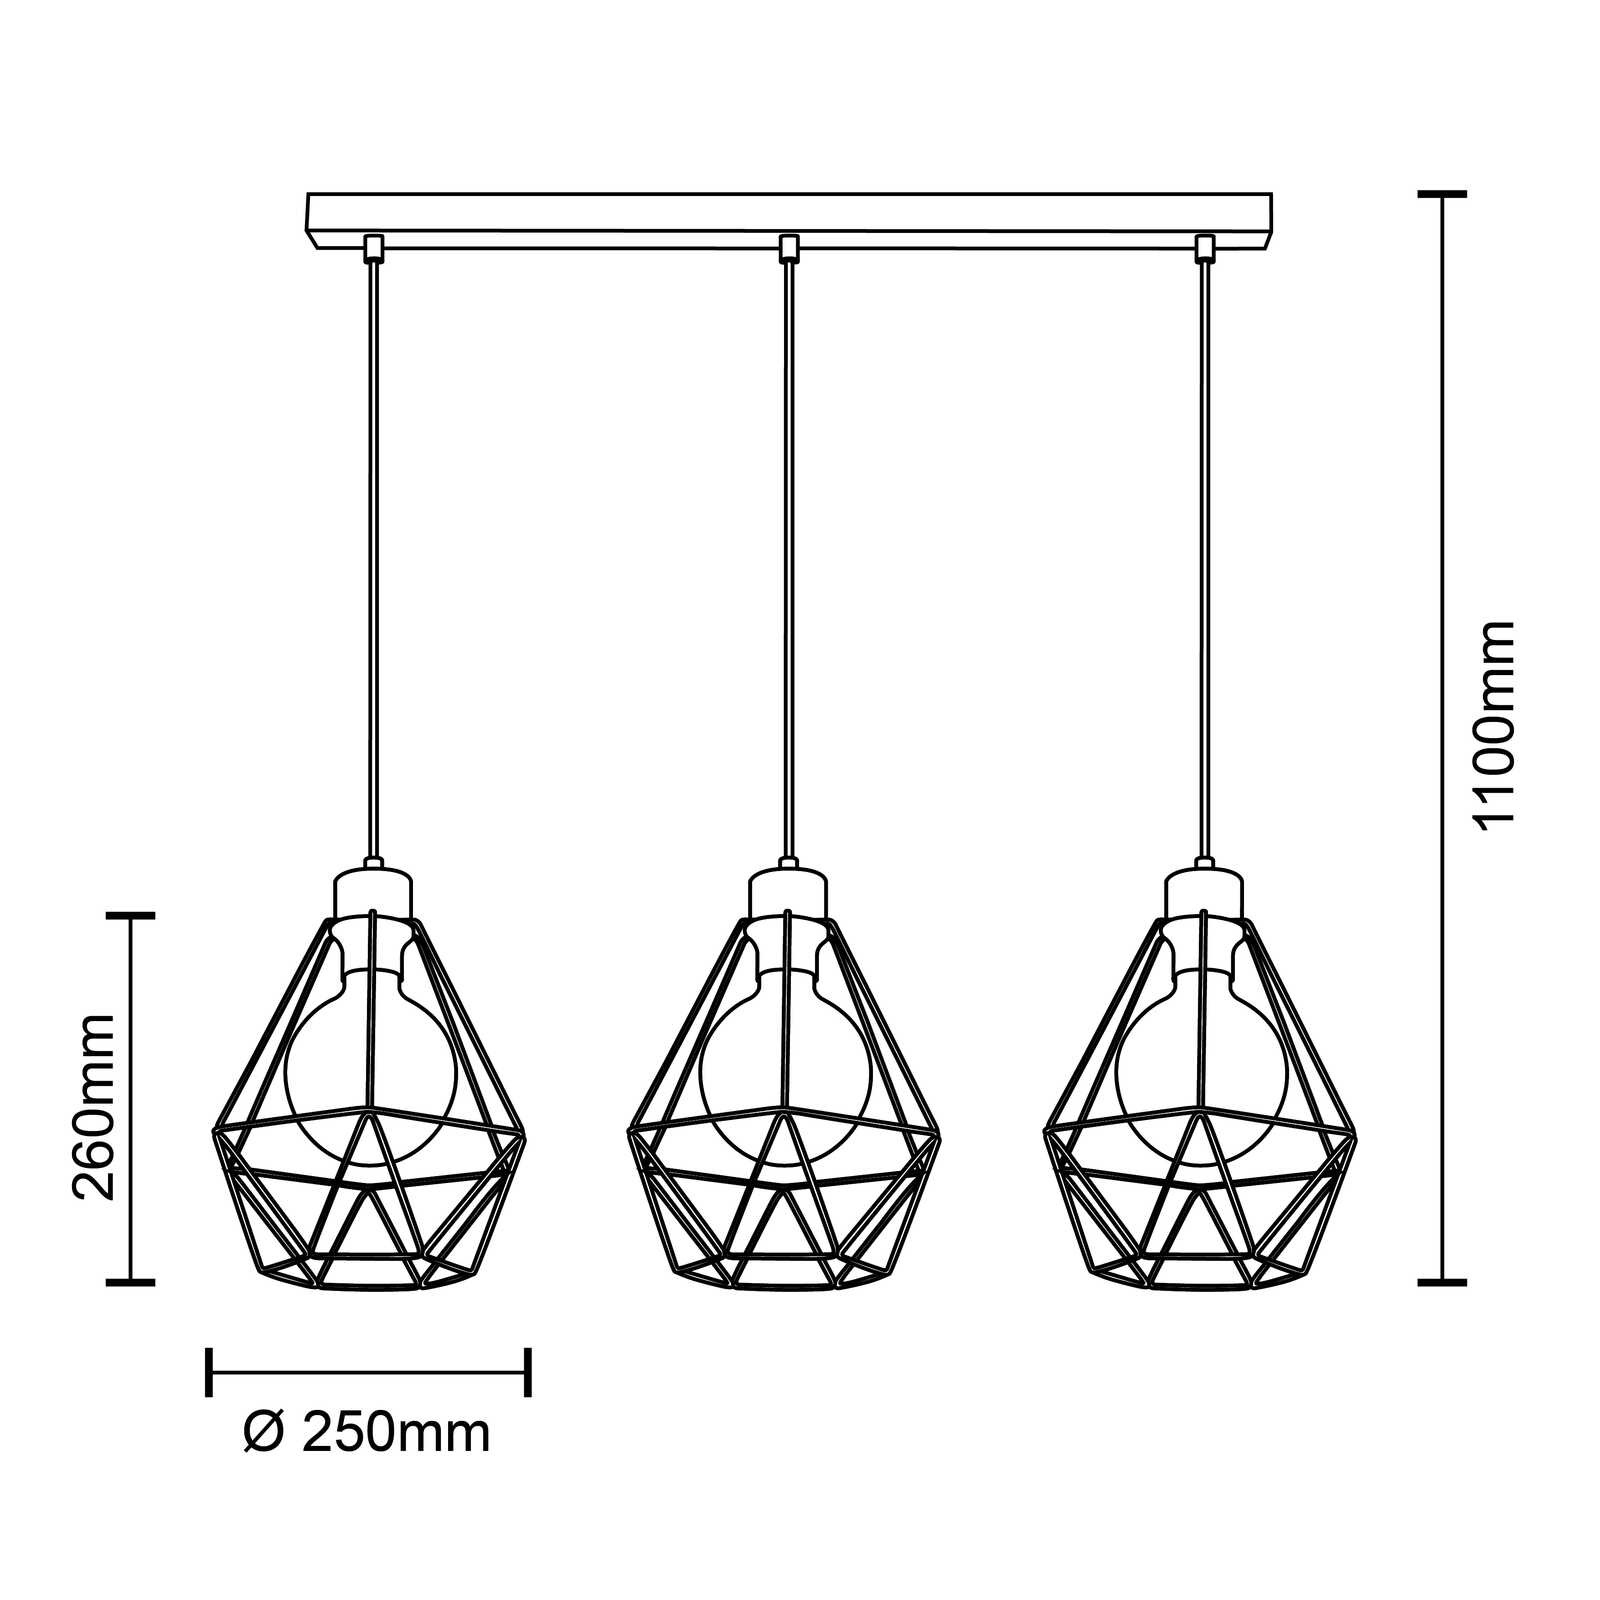             Houten hanglamp - Fine 2 - Bruin
        